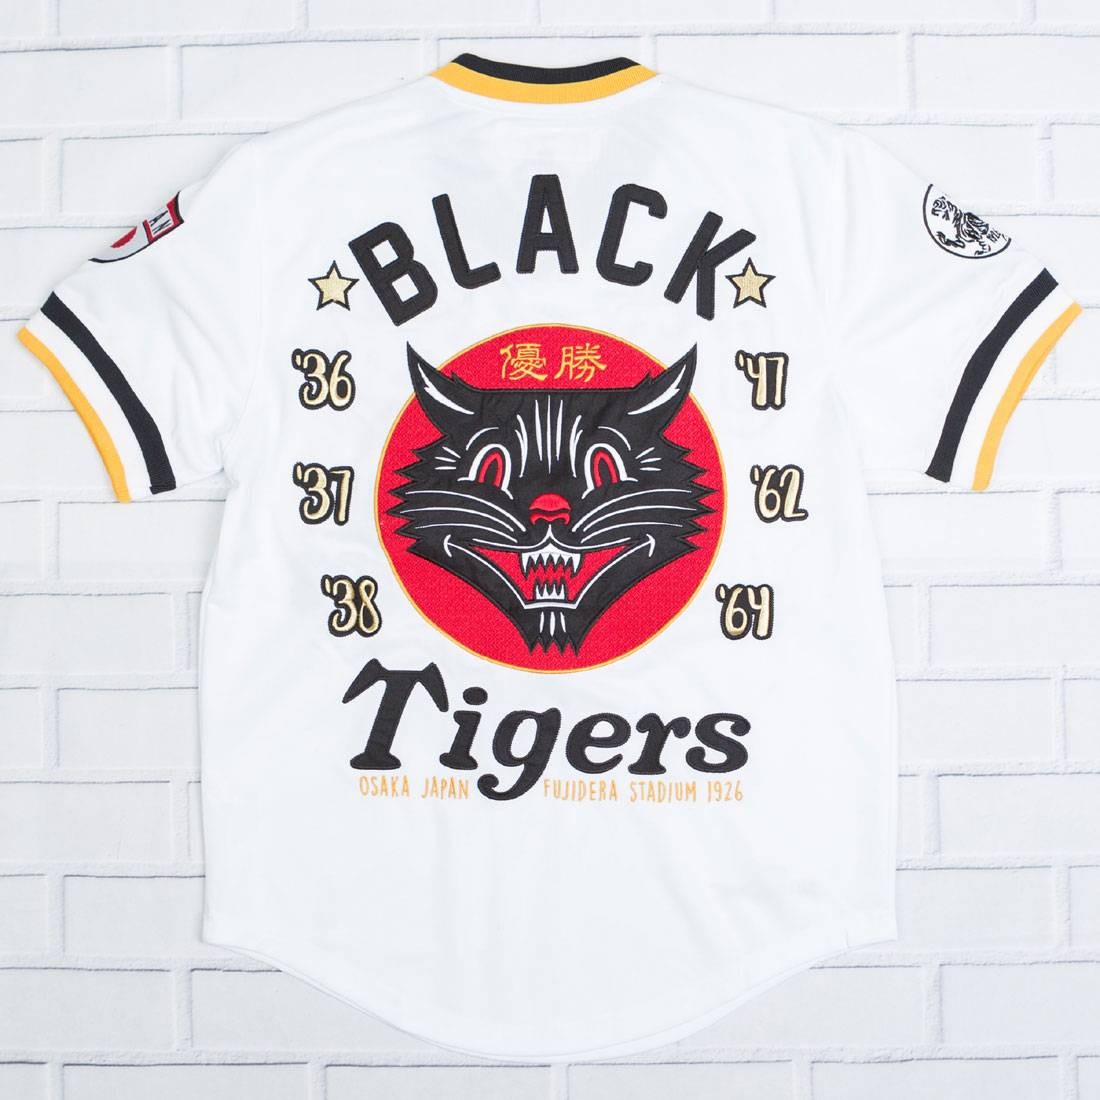 black tigers jersey